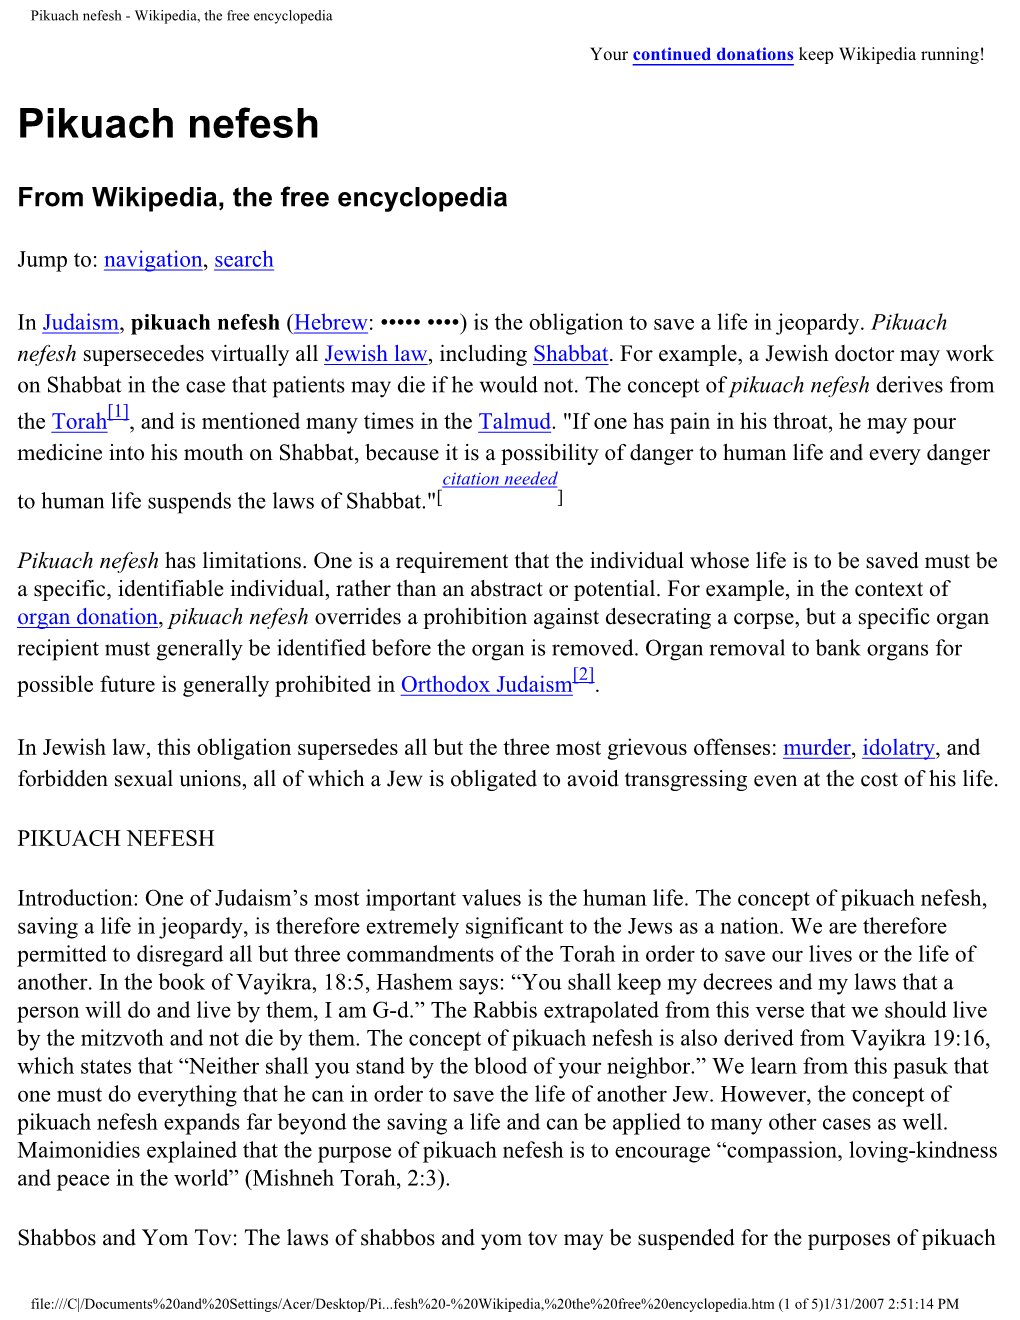 Pikuach Nefesh - Wikipedia, the Free Encyclopedia